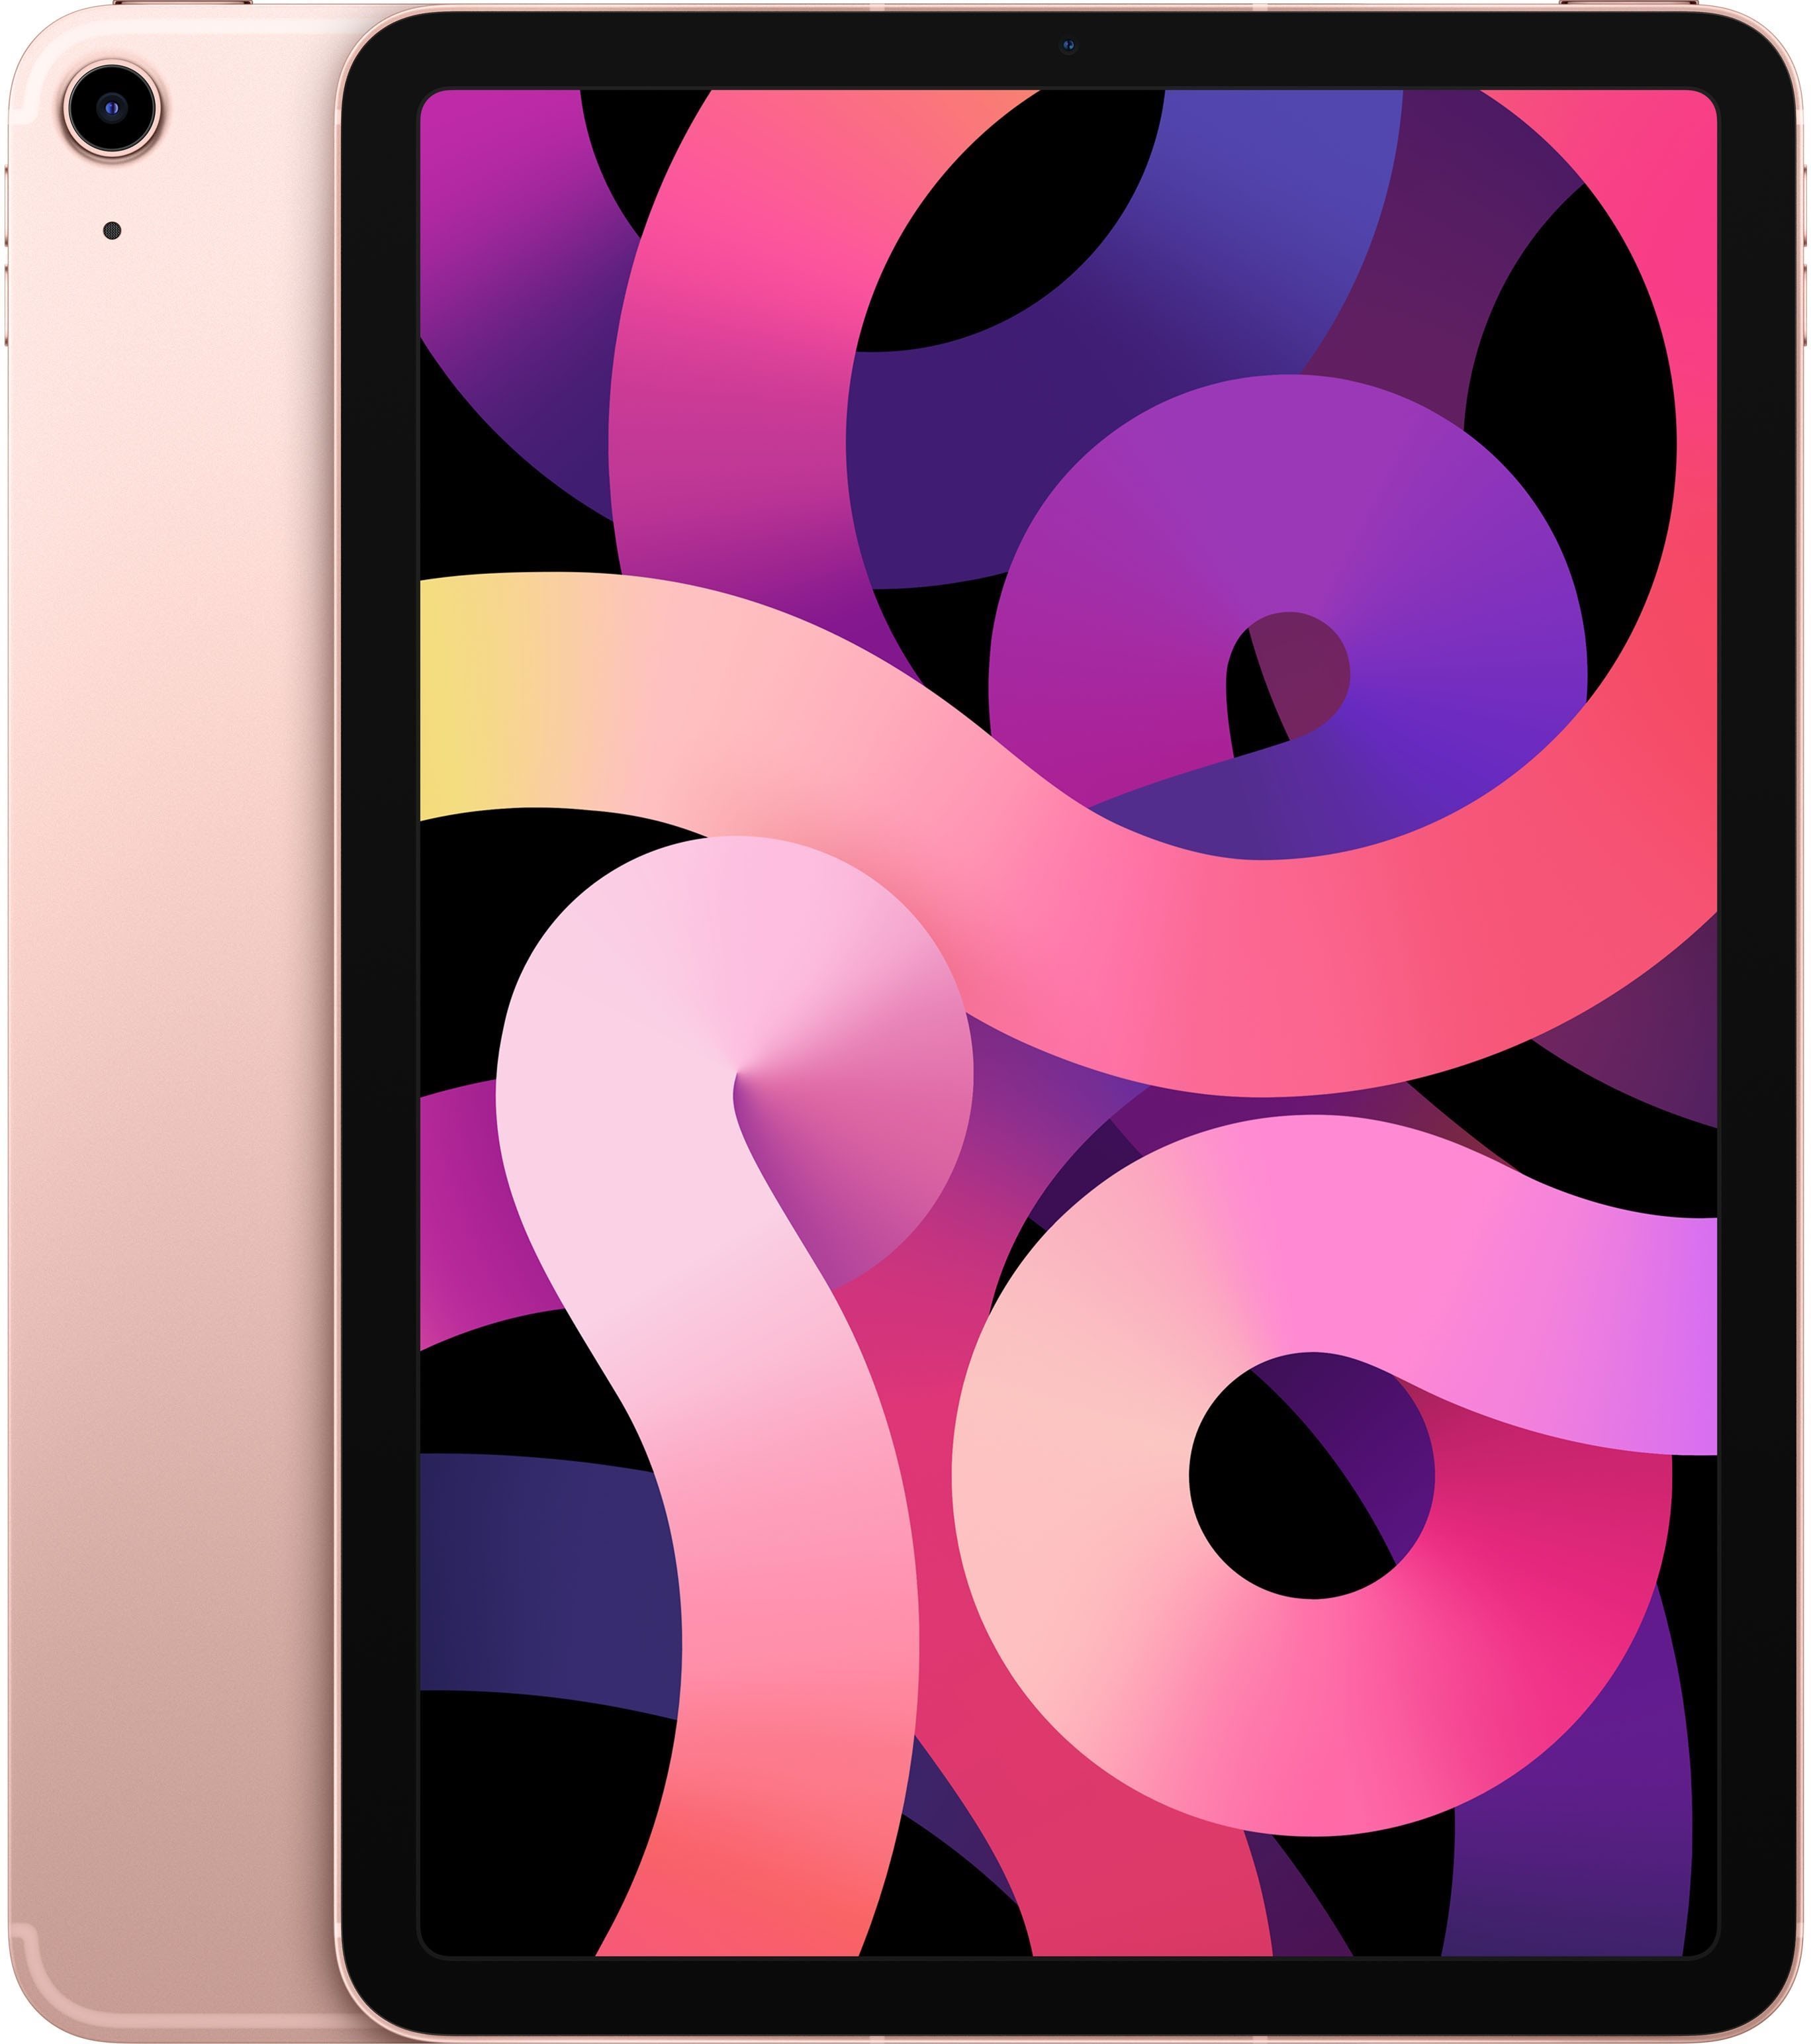 Tablet iPad Air 256GB Cellular Rose Gold 2020 Screen